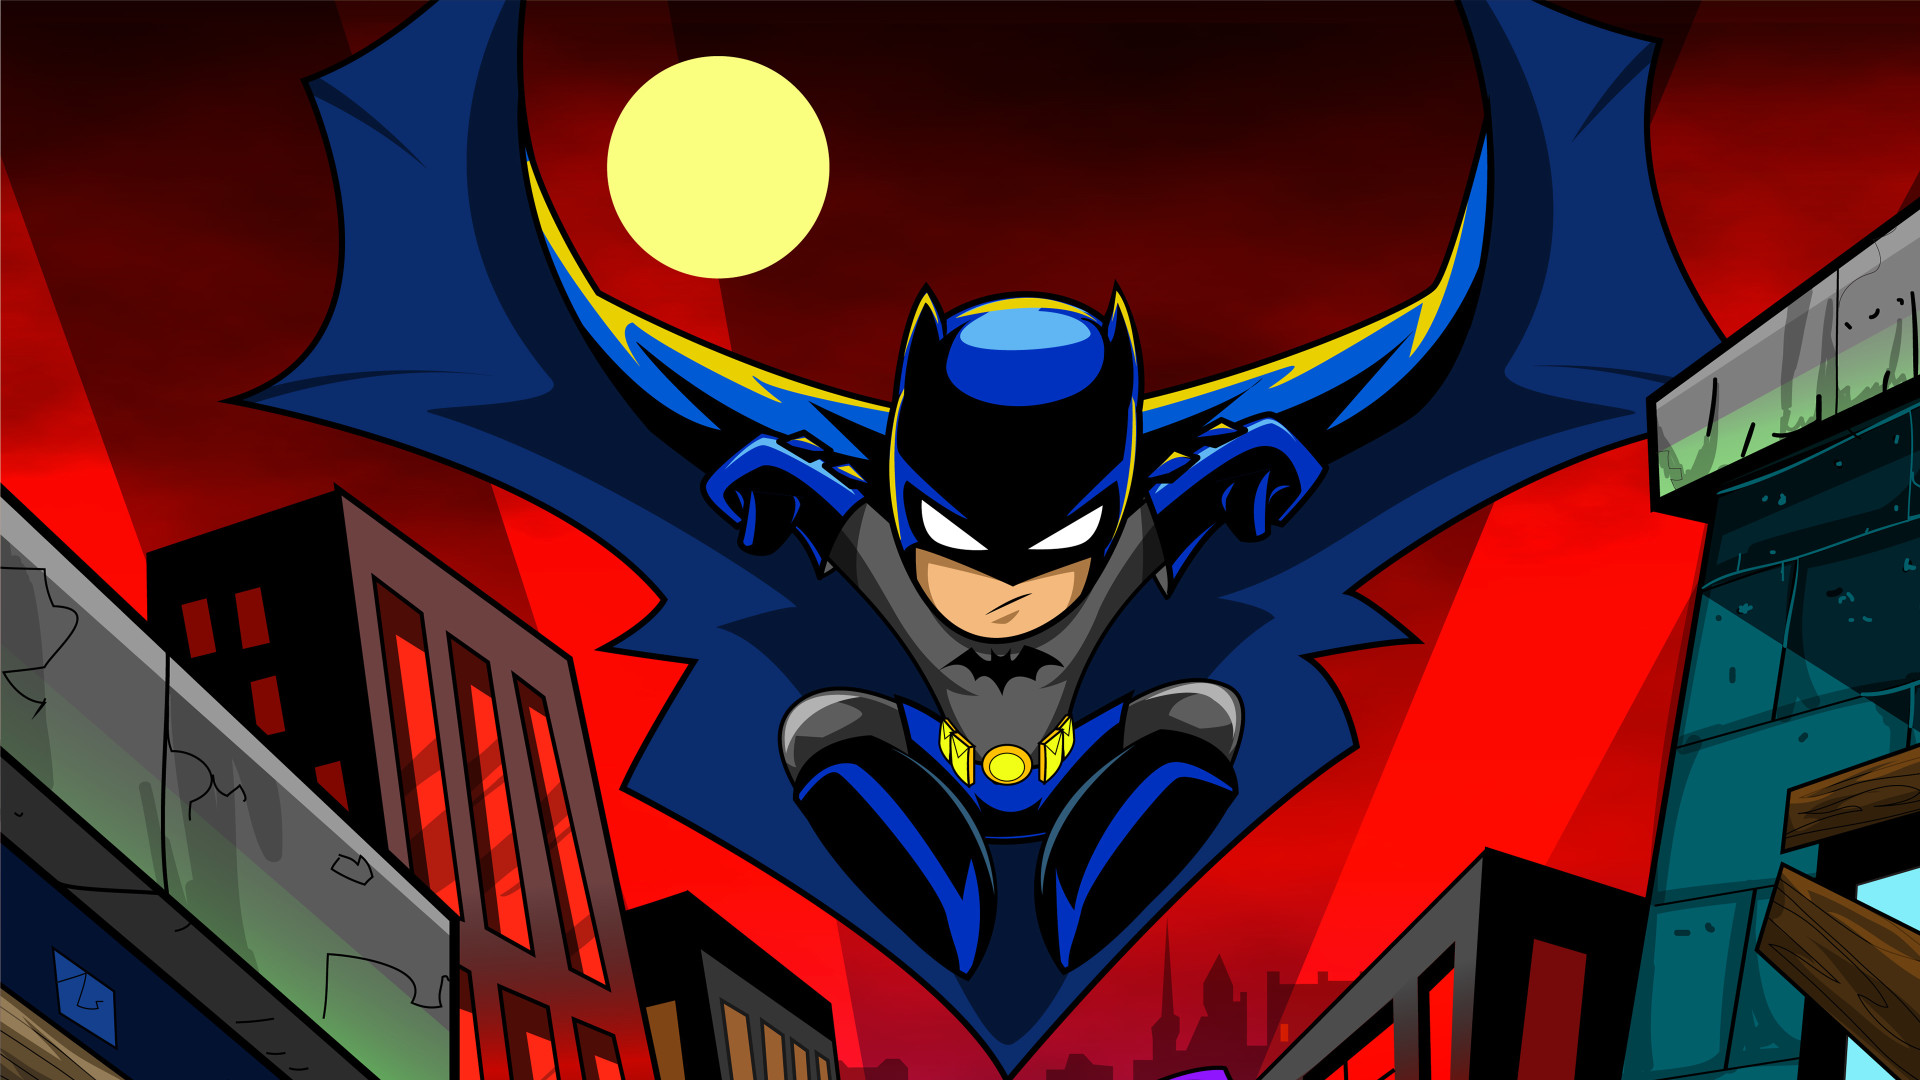 hd cartoon wallpapers 1080p download full,fictional character,superhero,fiction,hero,batman